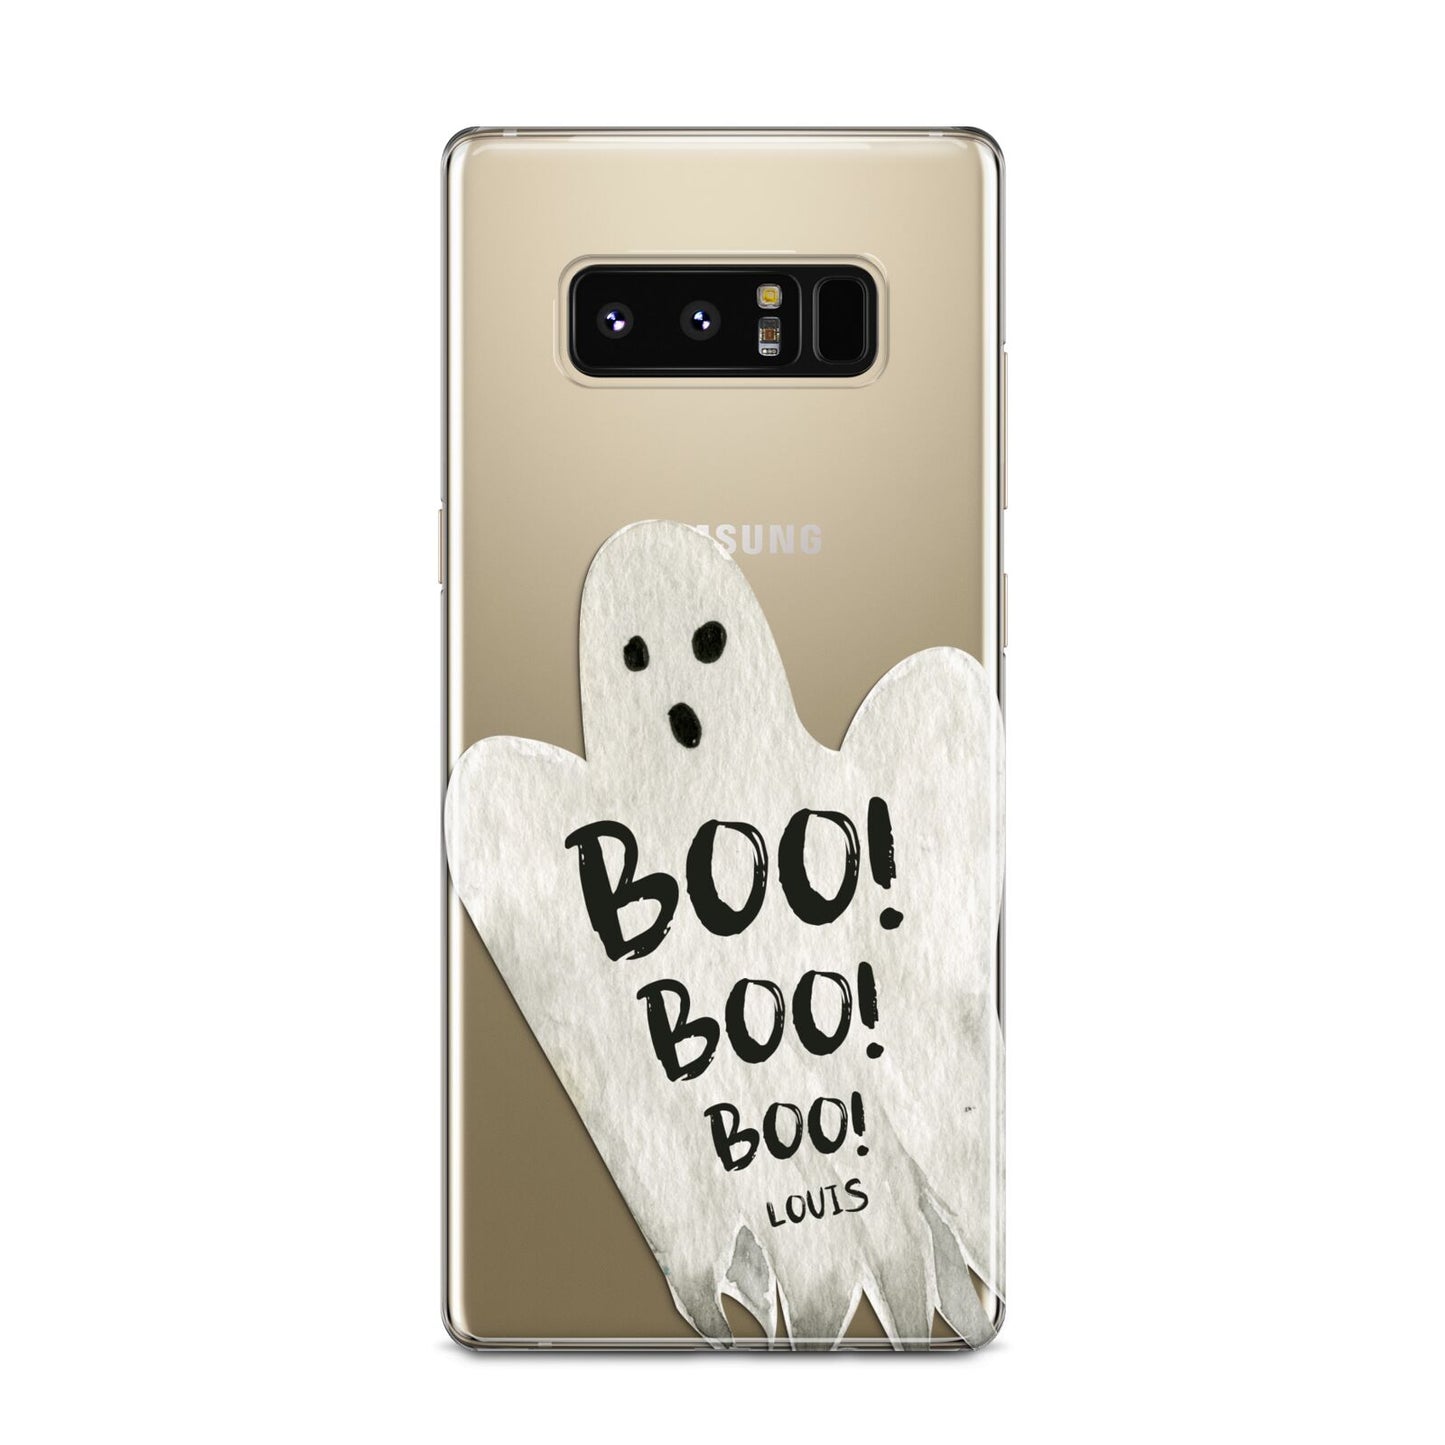 Boo Ghost Custom Samsung Galaxy Note 8 Case